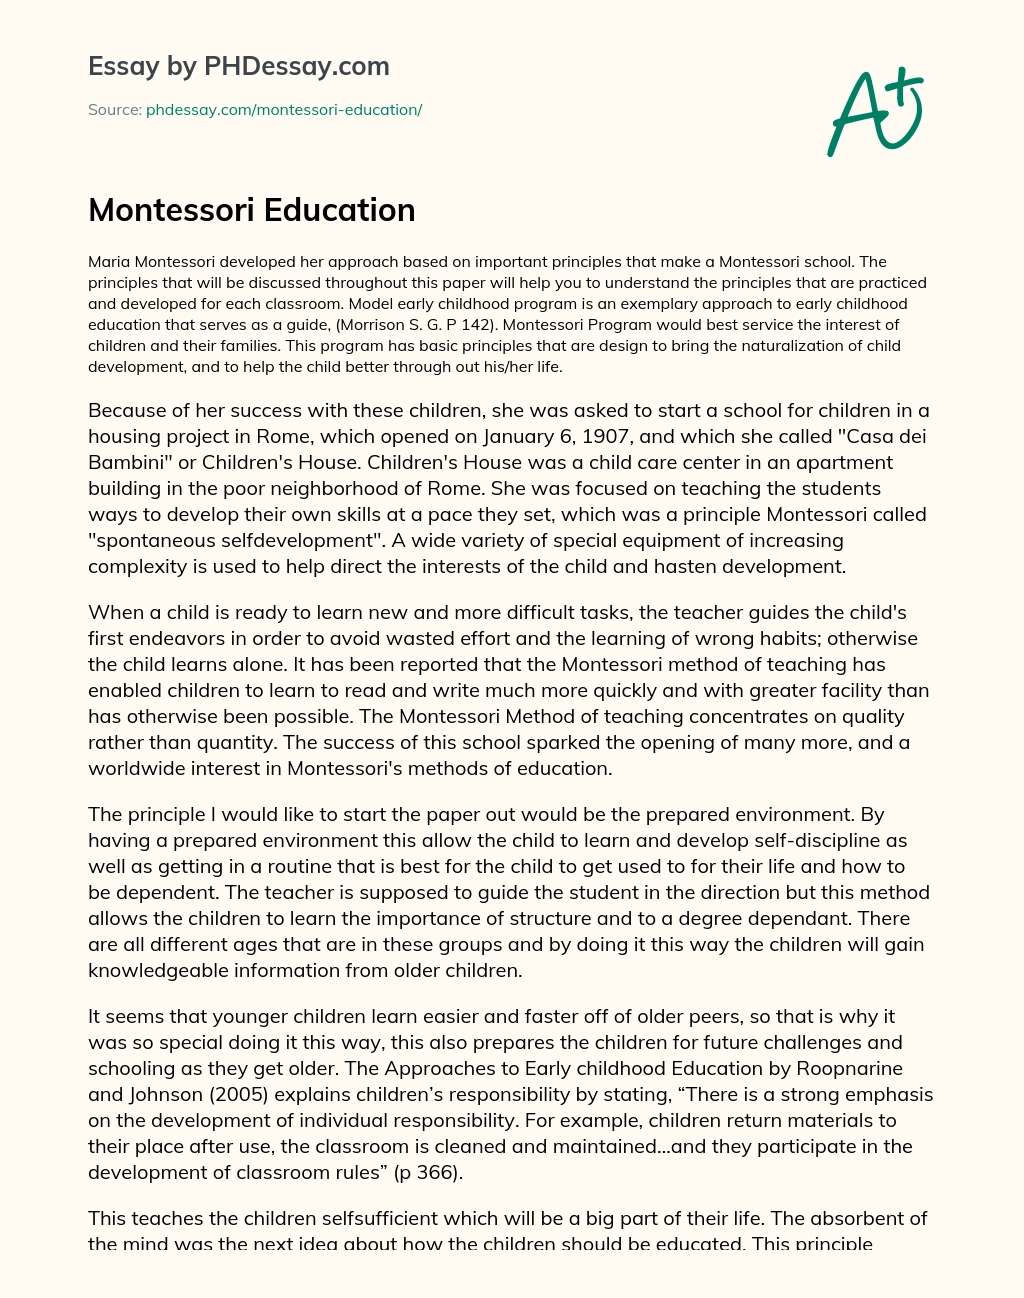 Montessori Education essay